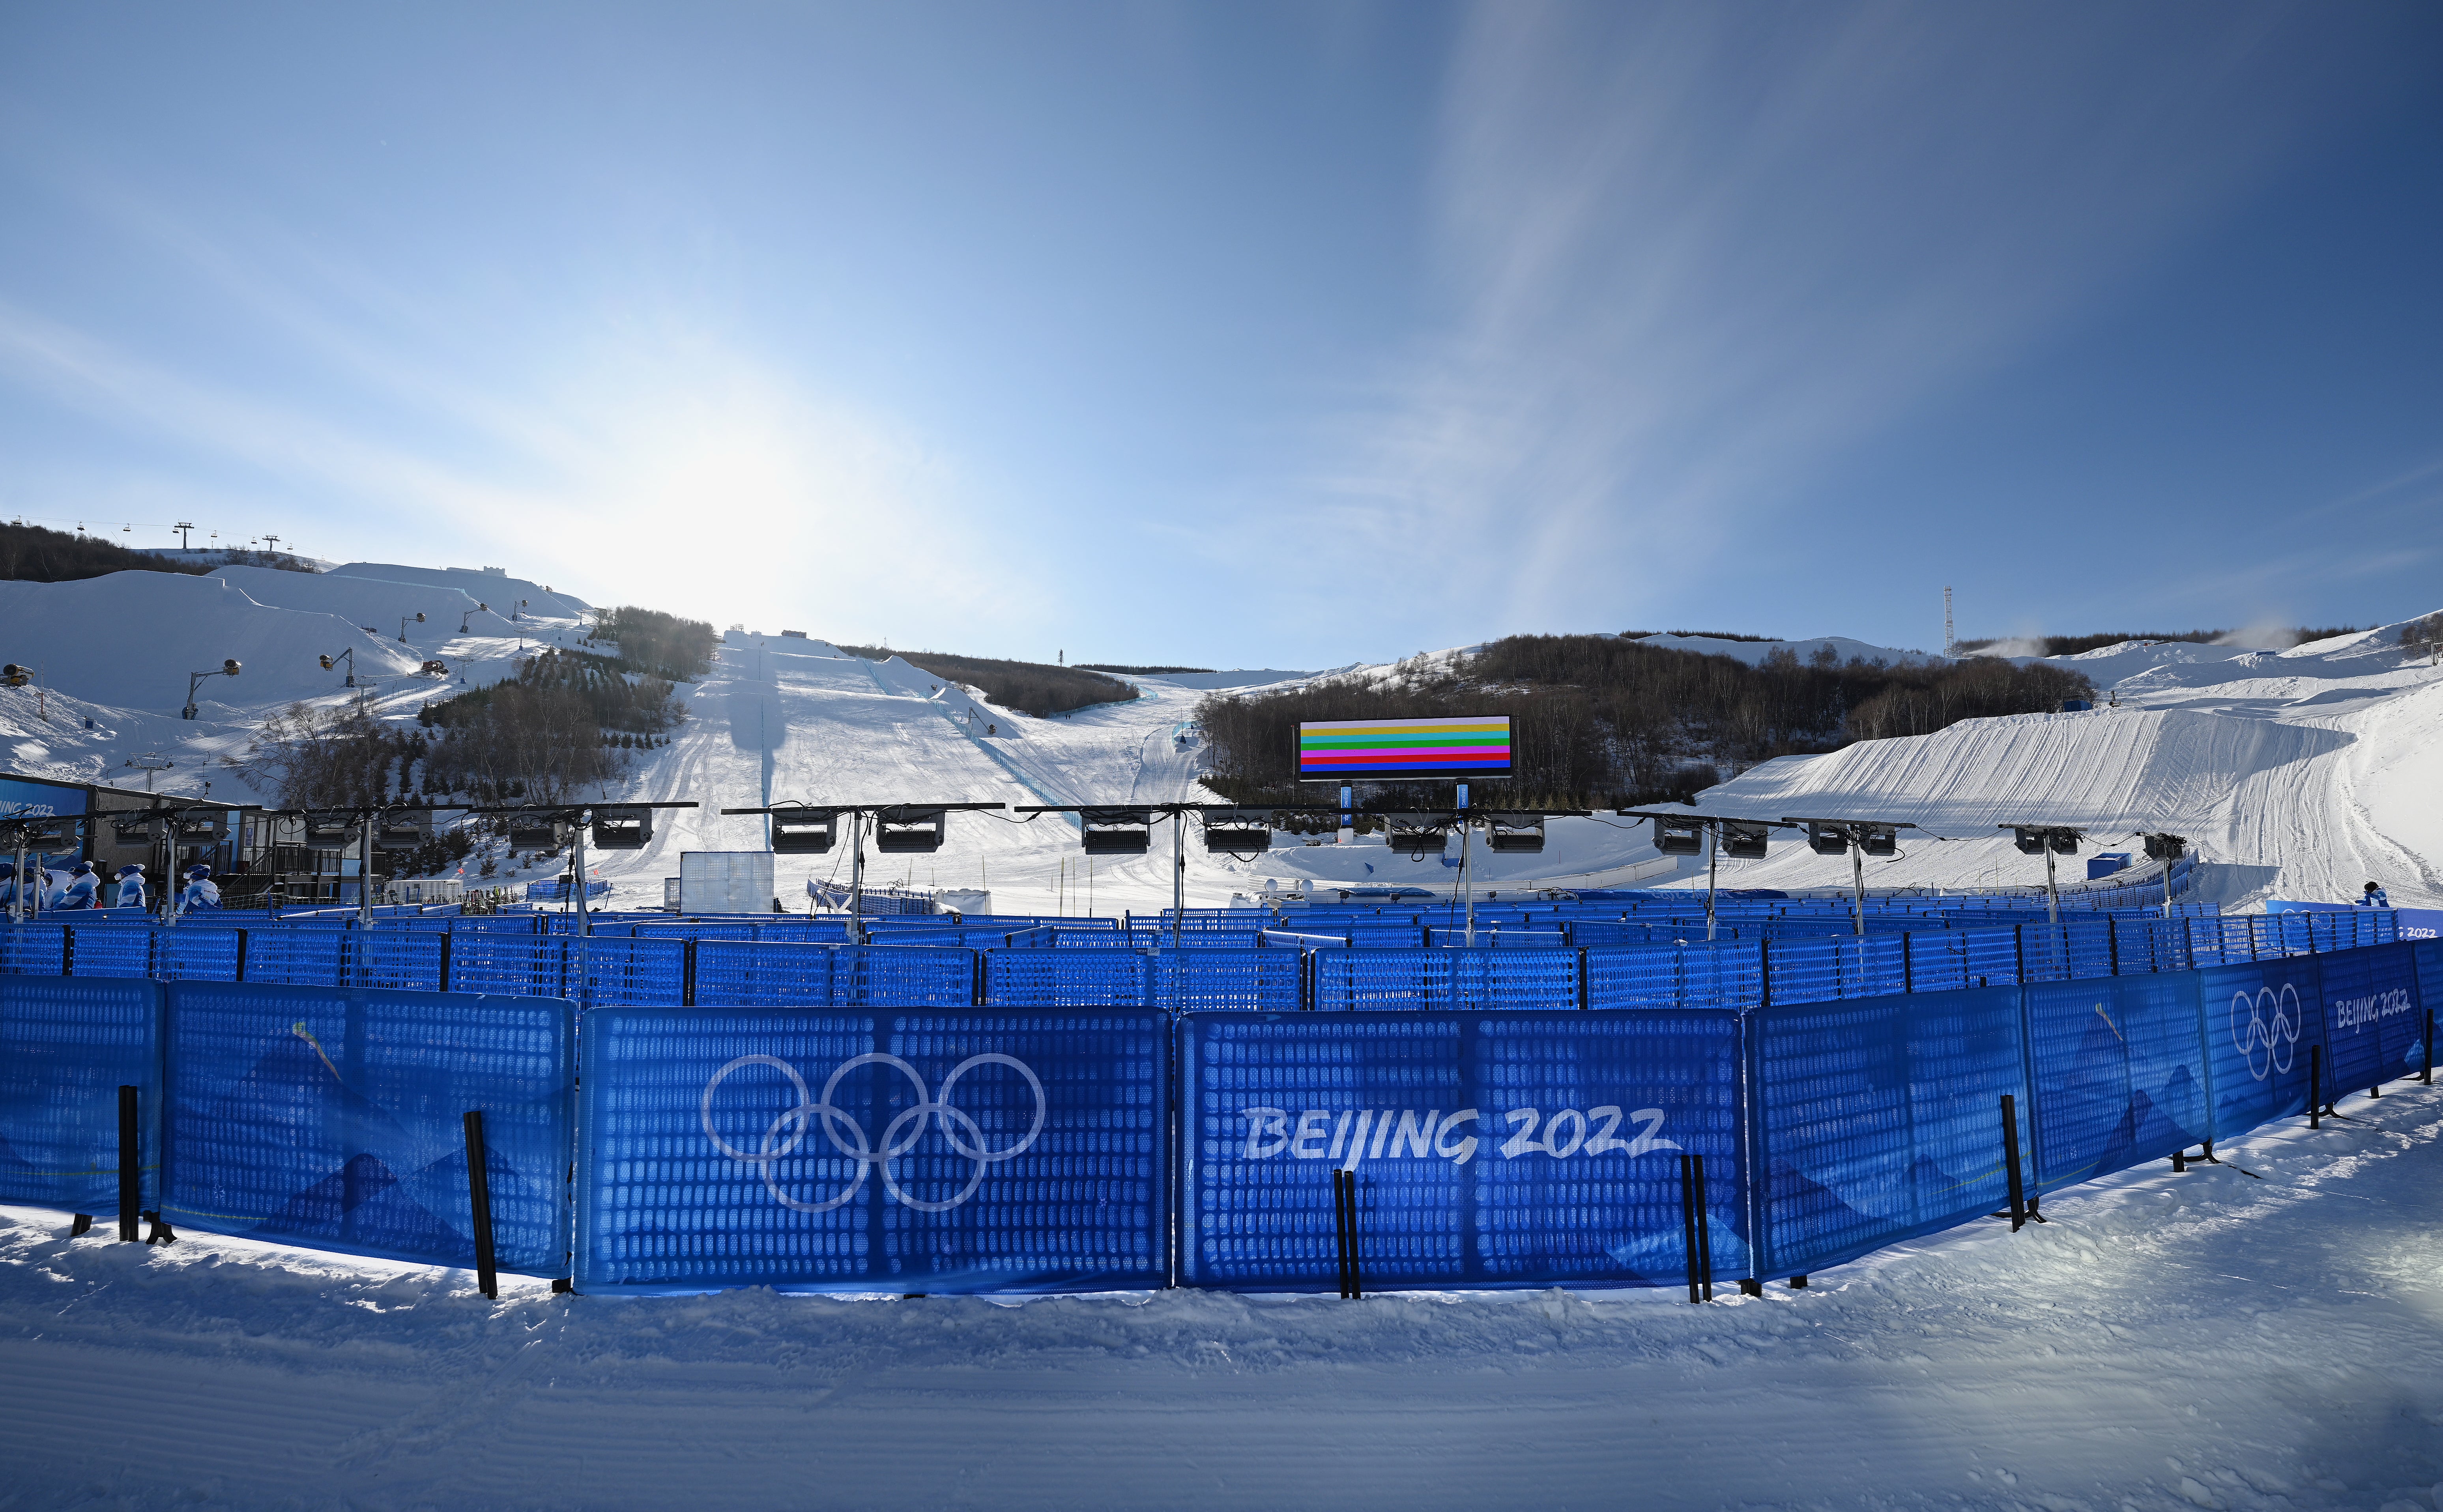 The Winter Olympics begin on February 4